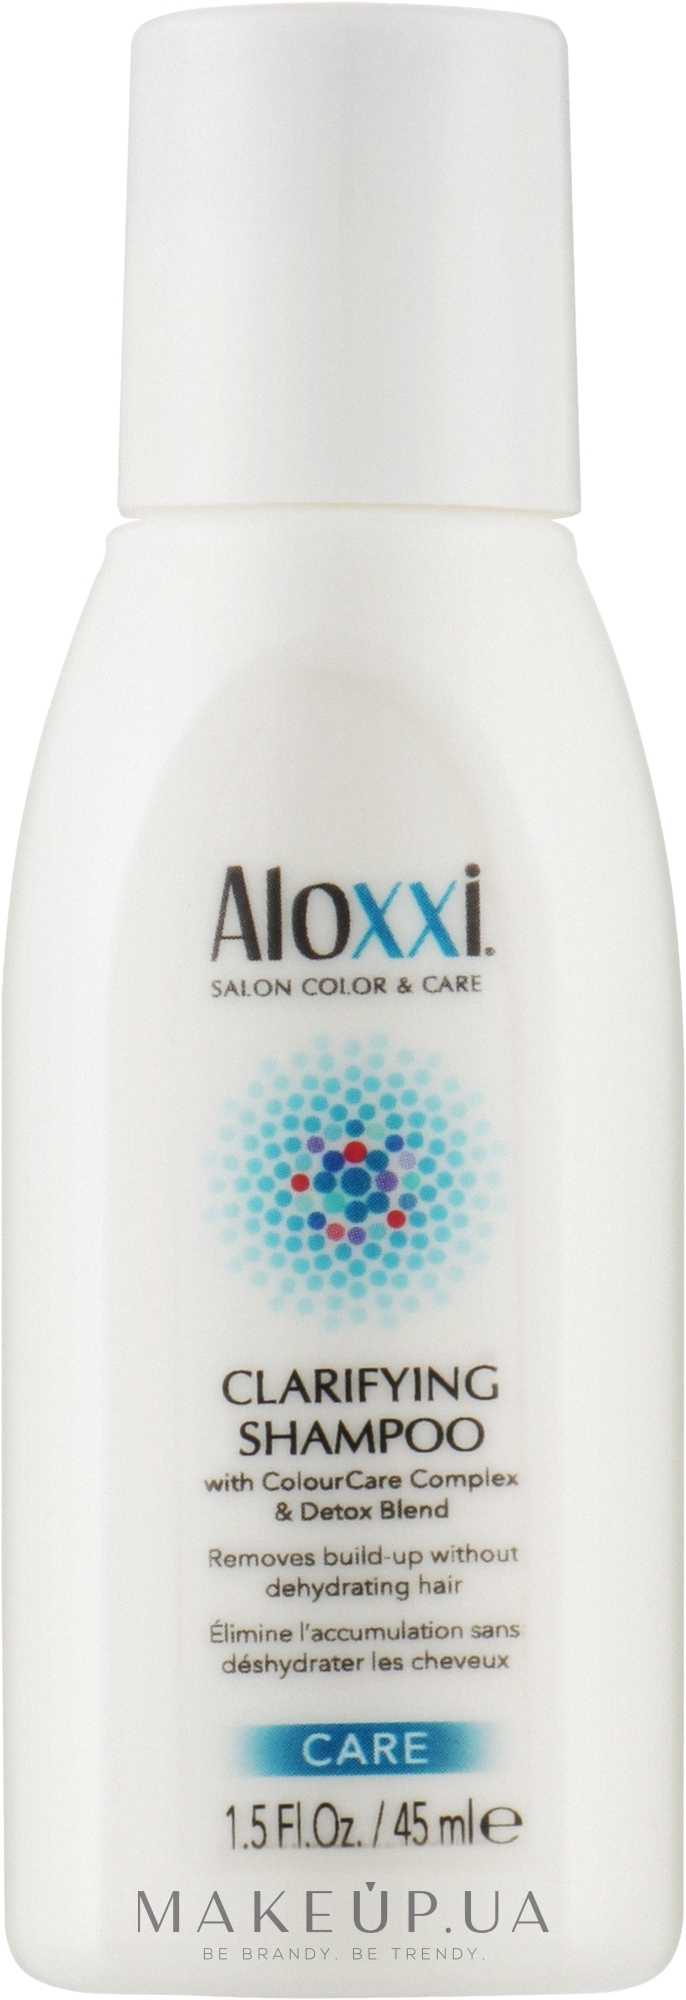 Очищающий детокс-шампунь для волос - Aloxxi Clarifying Shampoo (мини) — фото 45ml